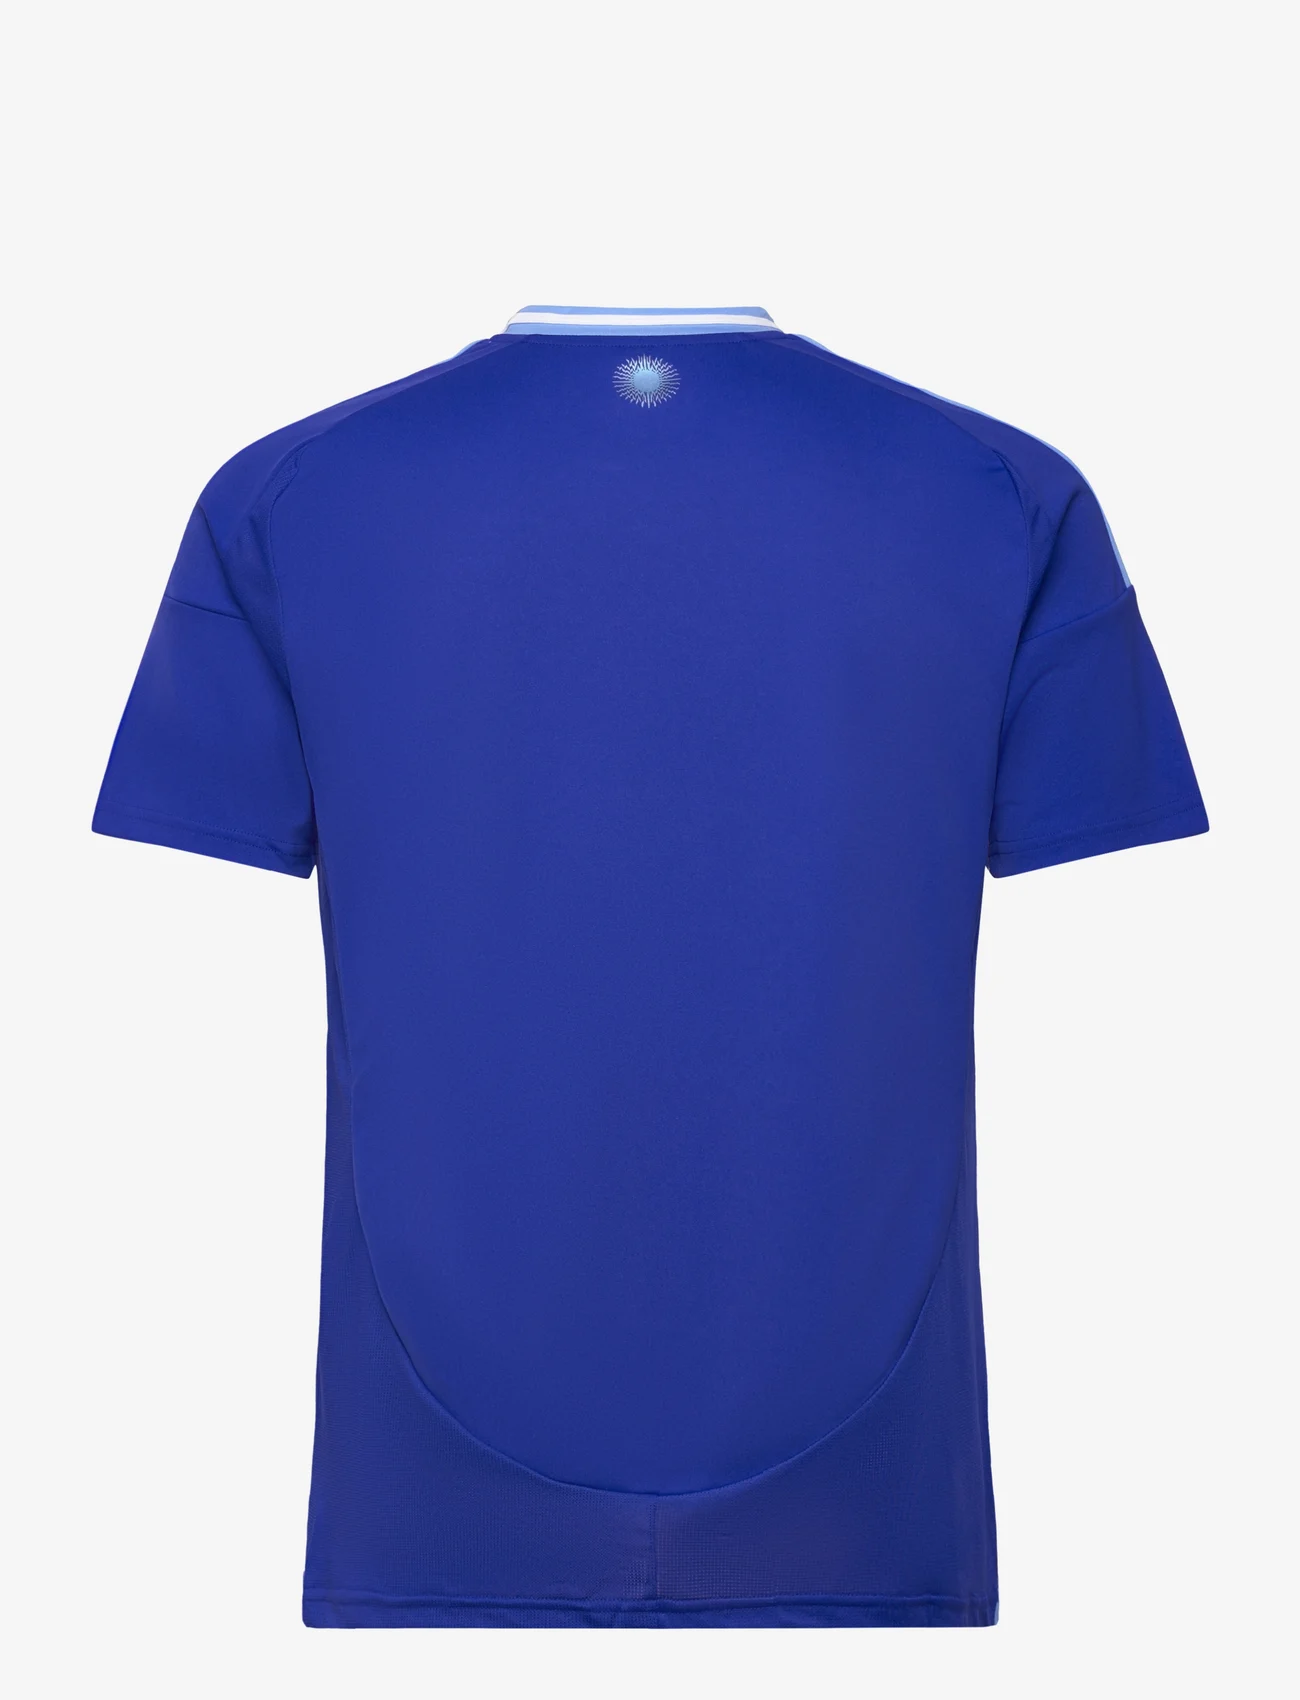 adidas Performance - AFA A JSY D - football shirts - lucblu/blubrs - 1